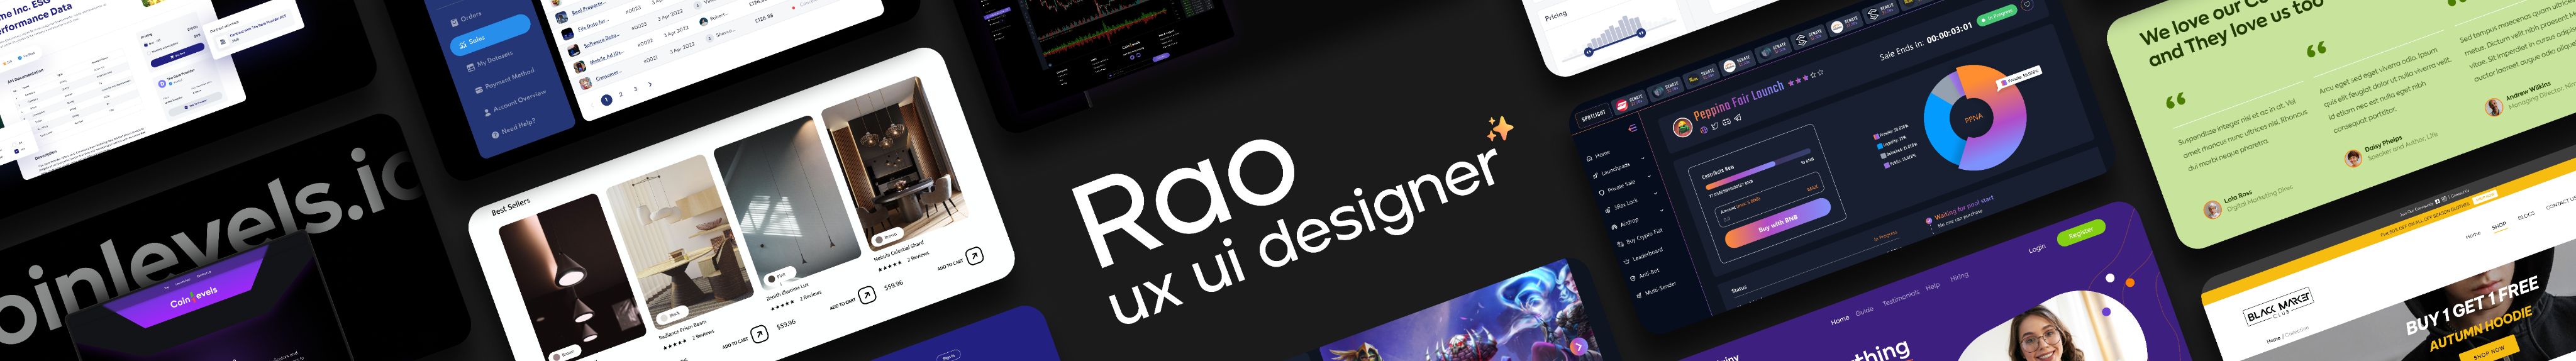 UX UI Designer - RAO のプロファイルバナー